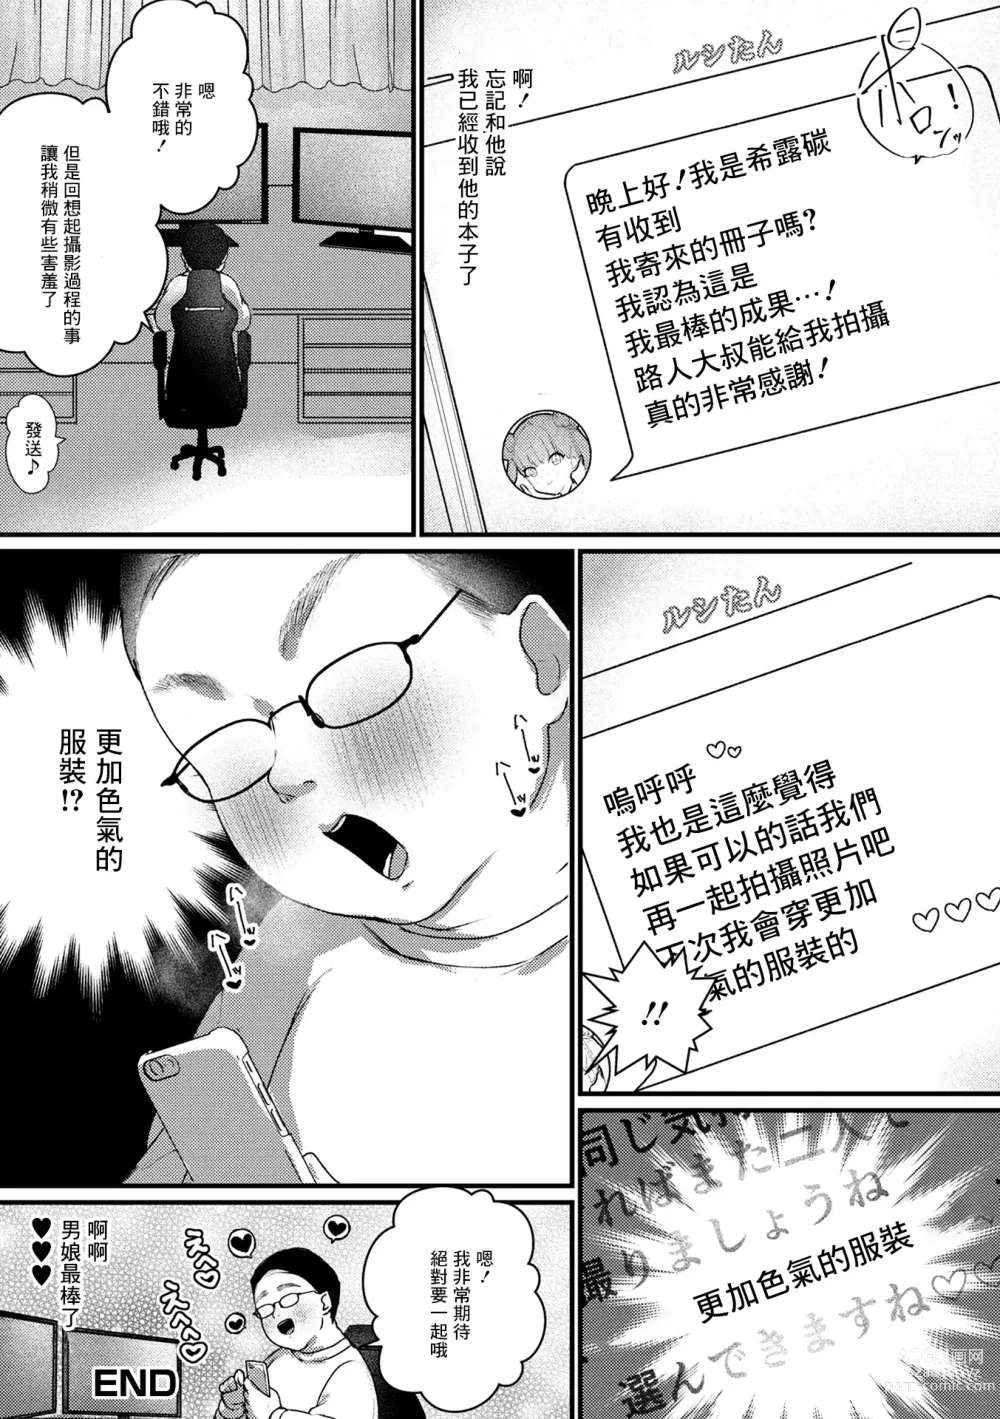 Page 16 of manga Dosukebe Otokonoko Cosplayer!